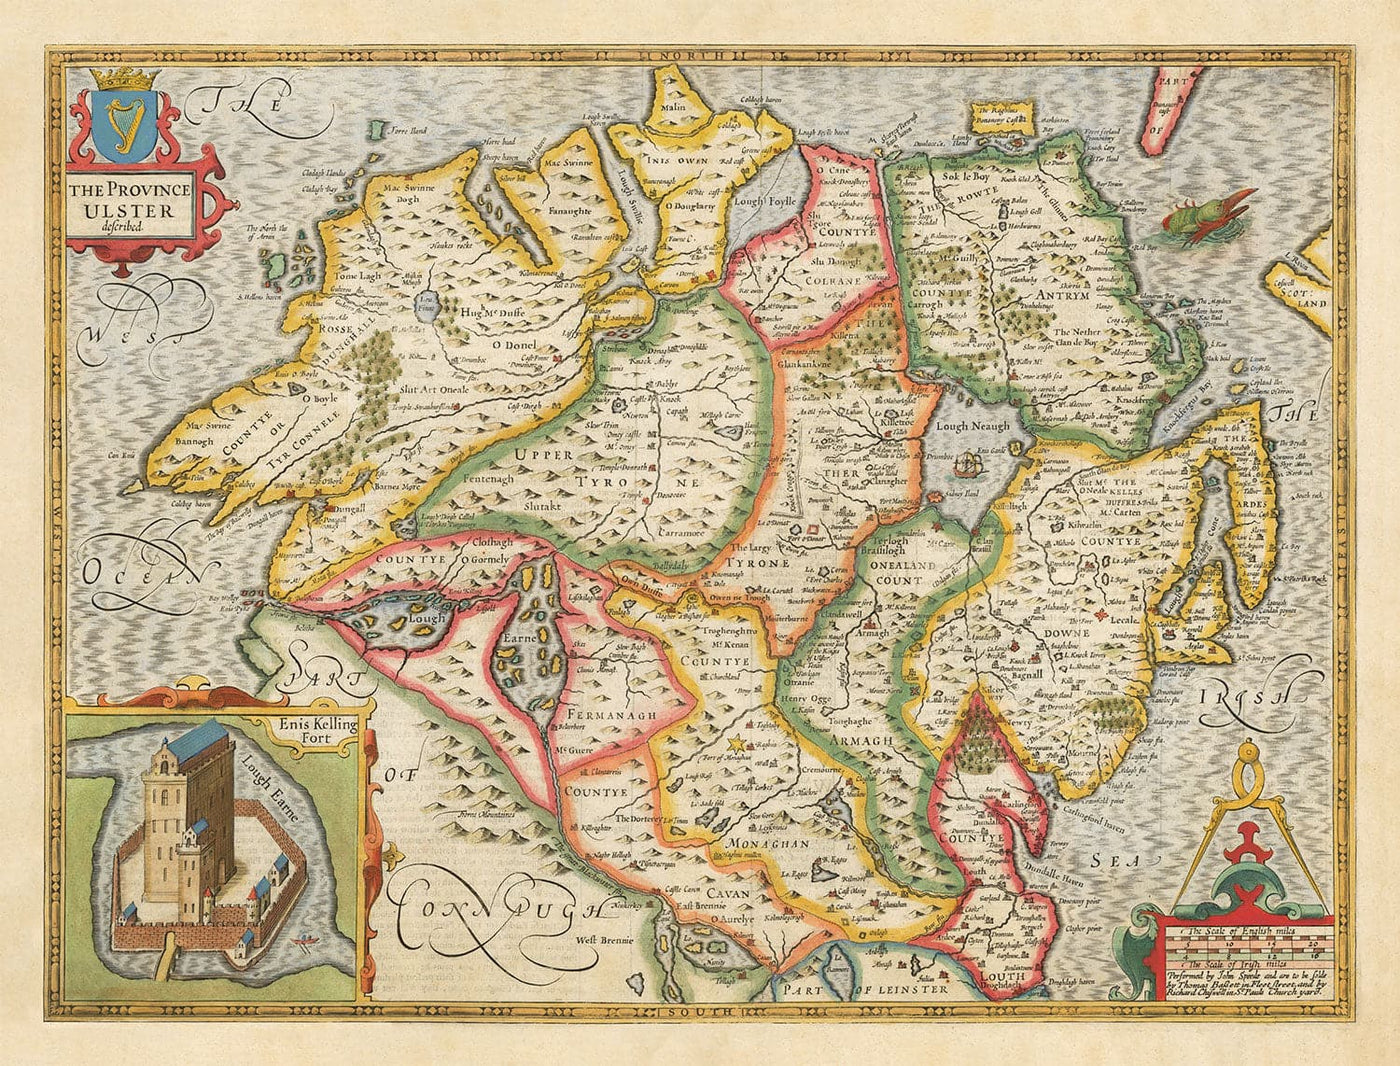 Ancienne carte d'Ulster, Irlande du Nord en 1611 par John Vitesse - Belfast, Derry, comté Antrim & Down